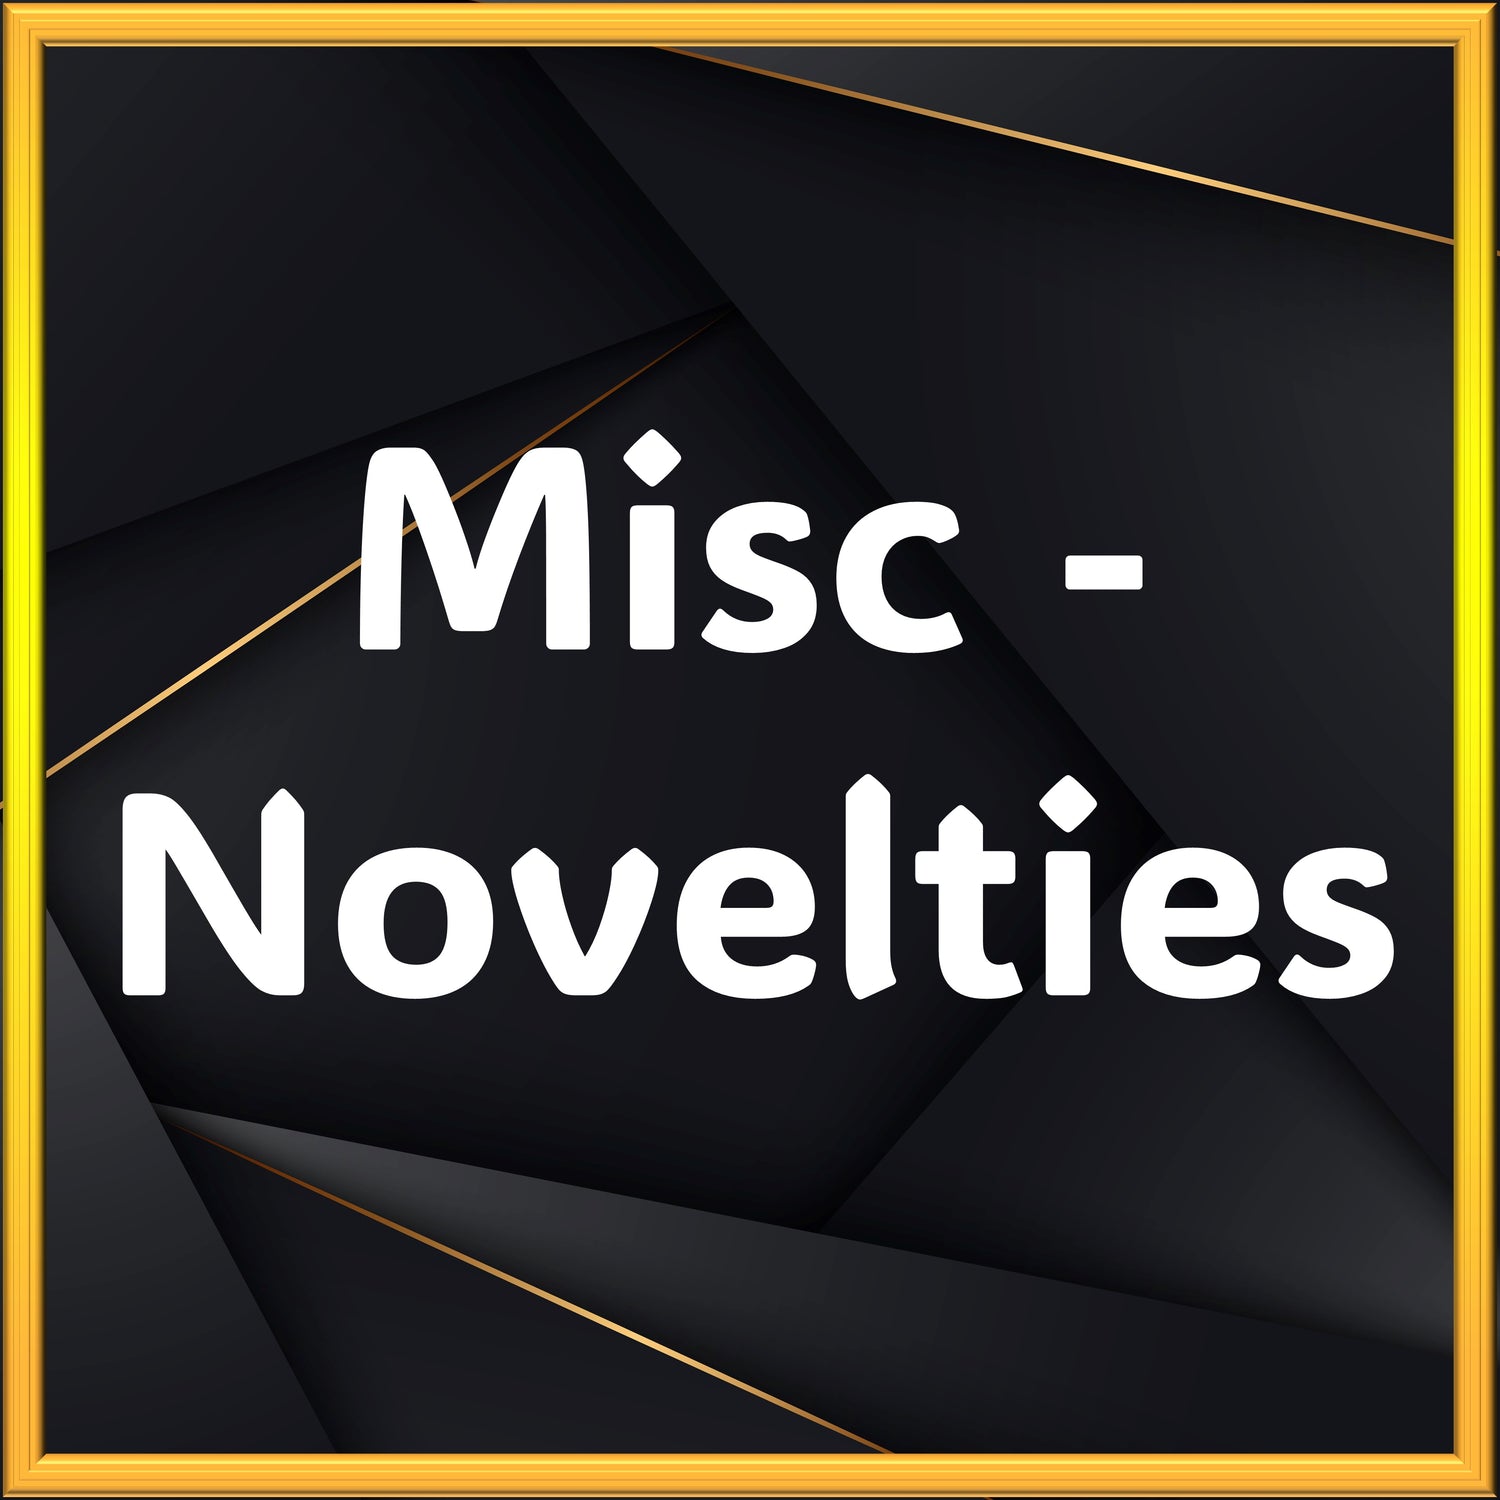 Misc - Novelties